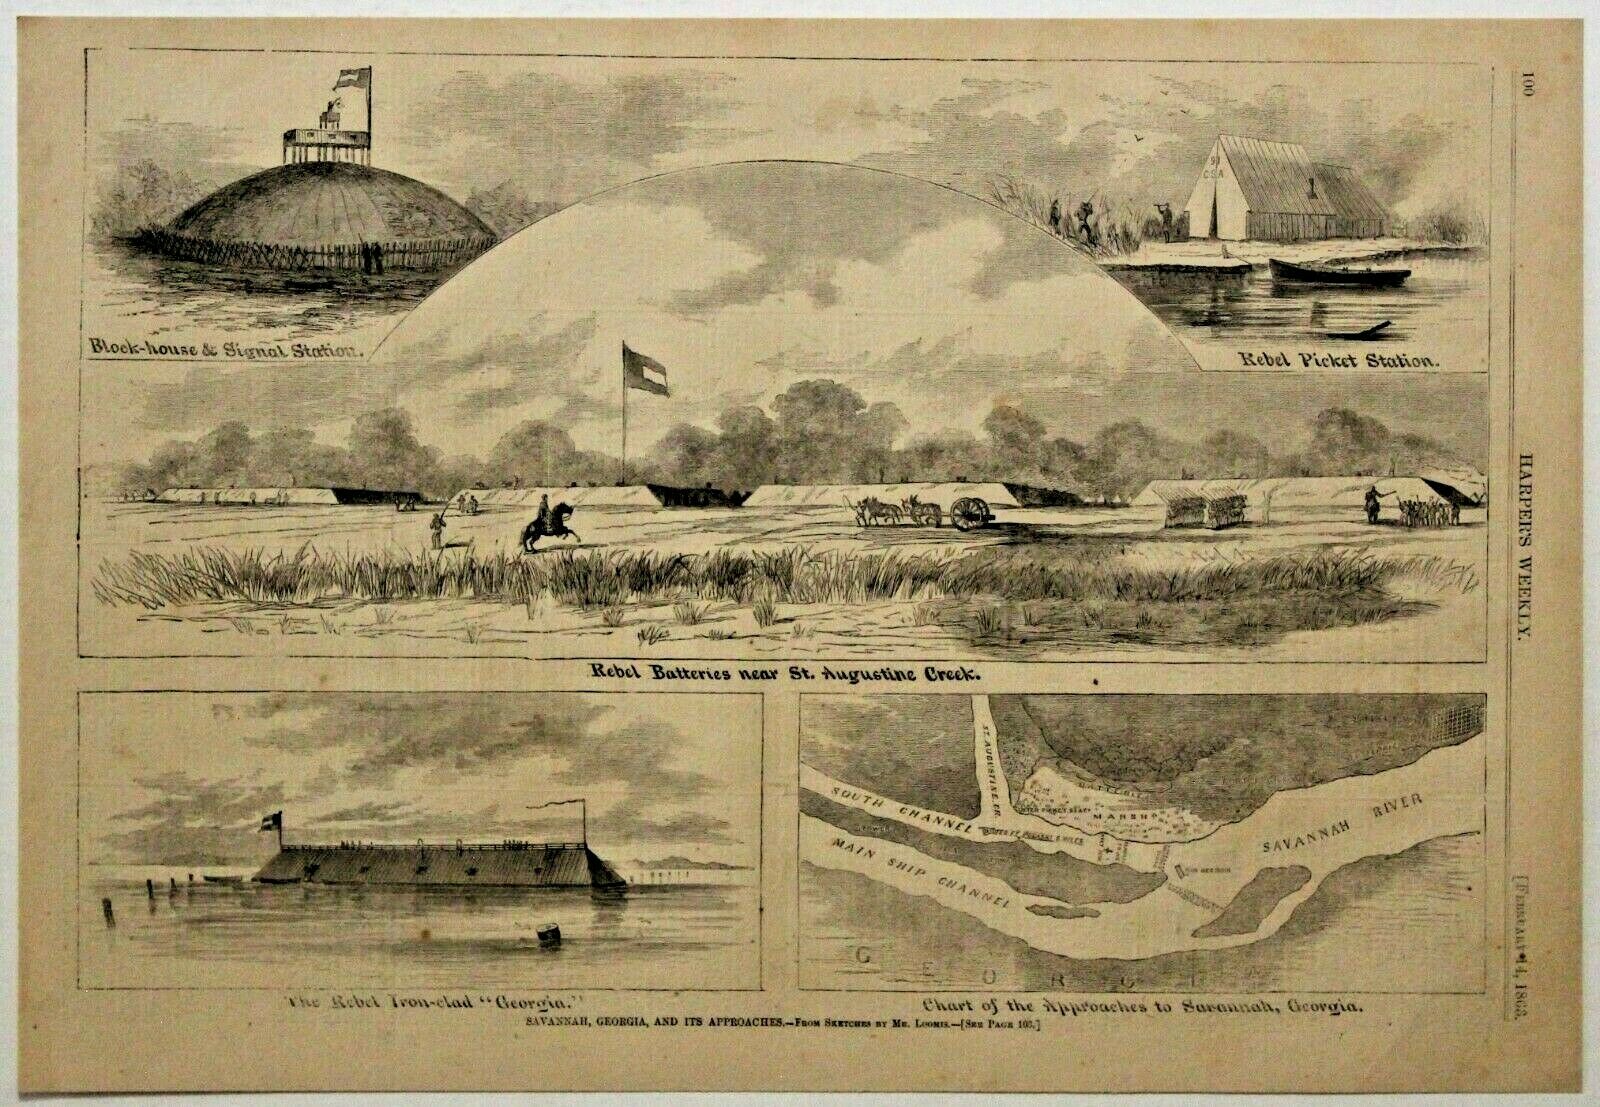 Savannah, Georgia & It's Approaches, St.augustine Creek Antique Civil War 1863